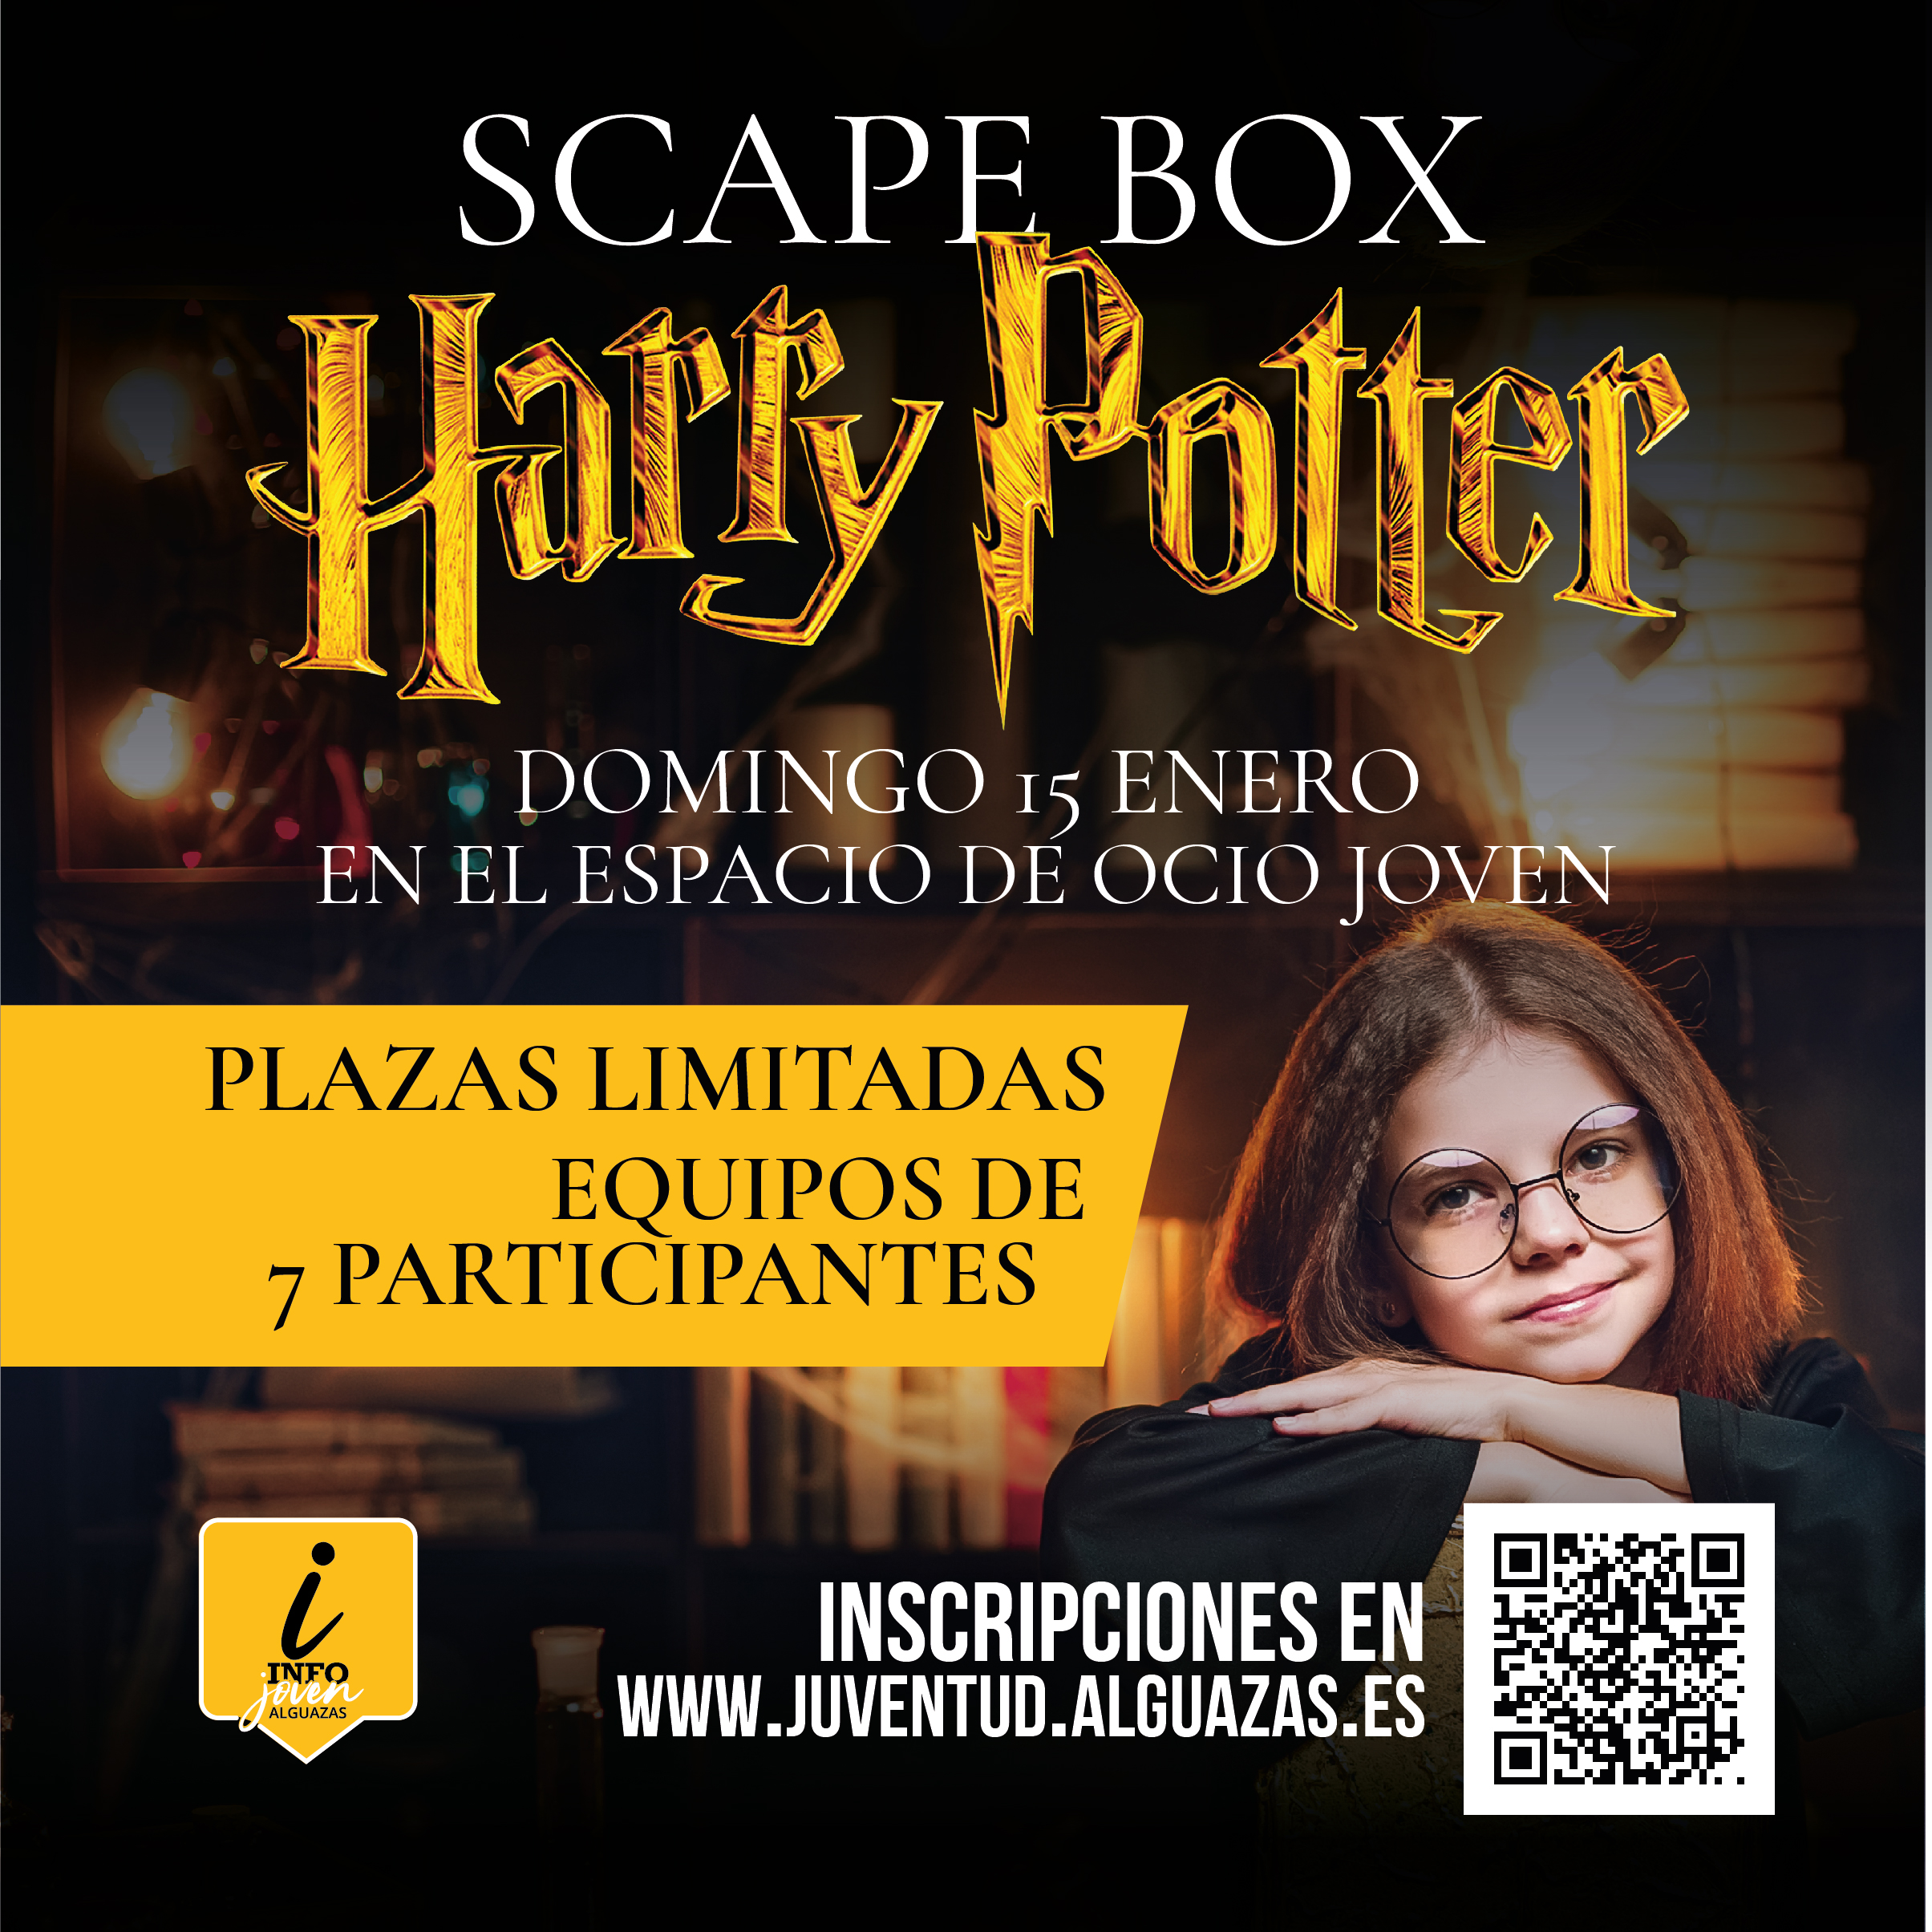 SCAPE BOX: "Harry Potter"